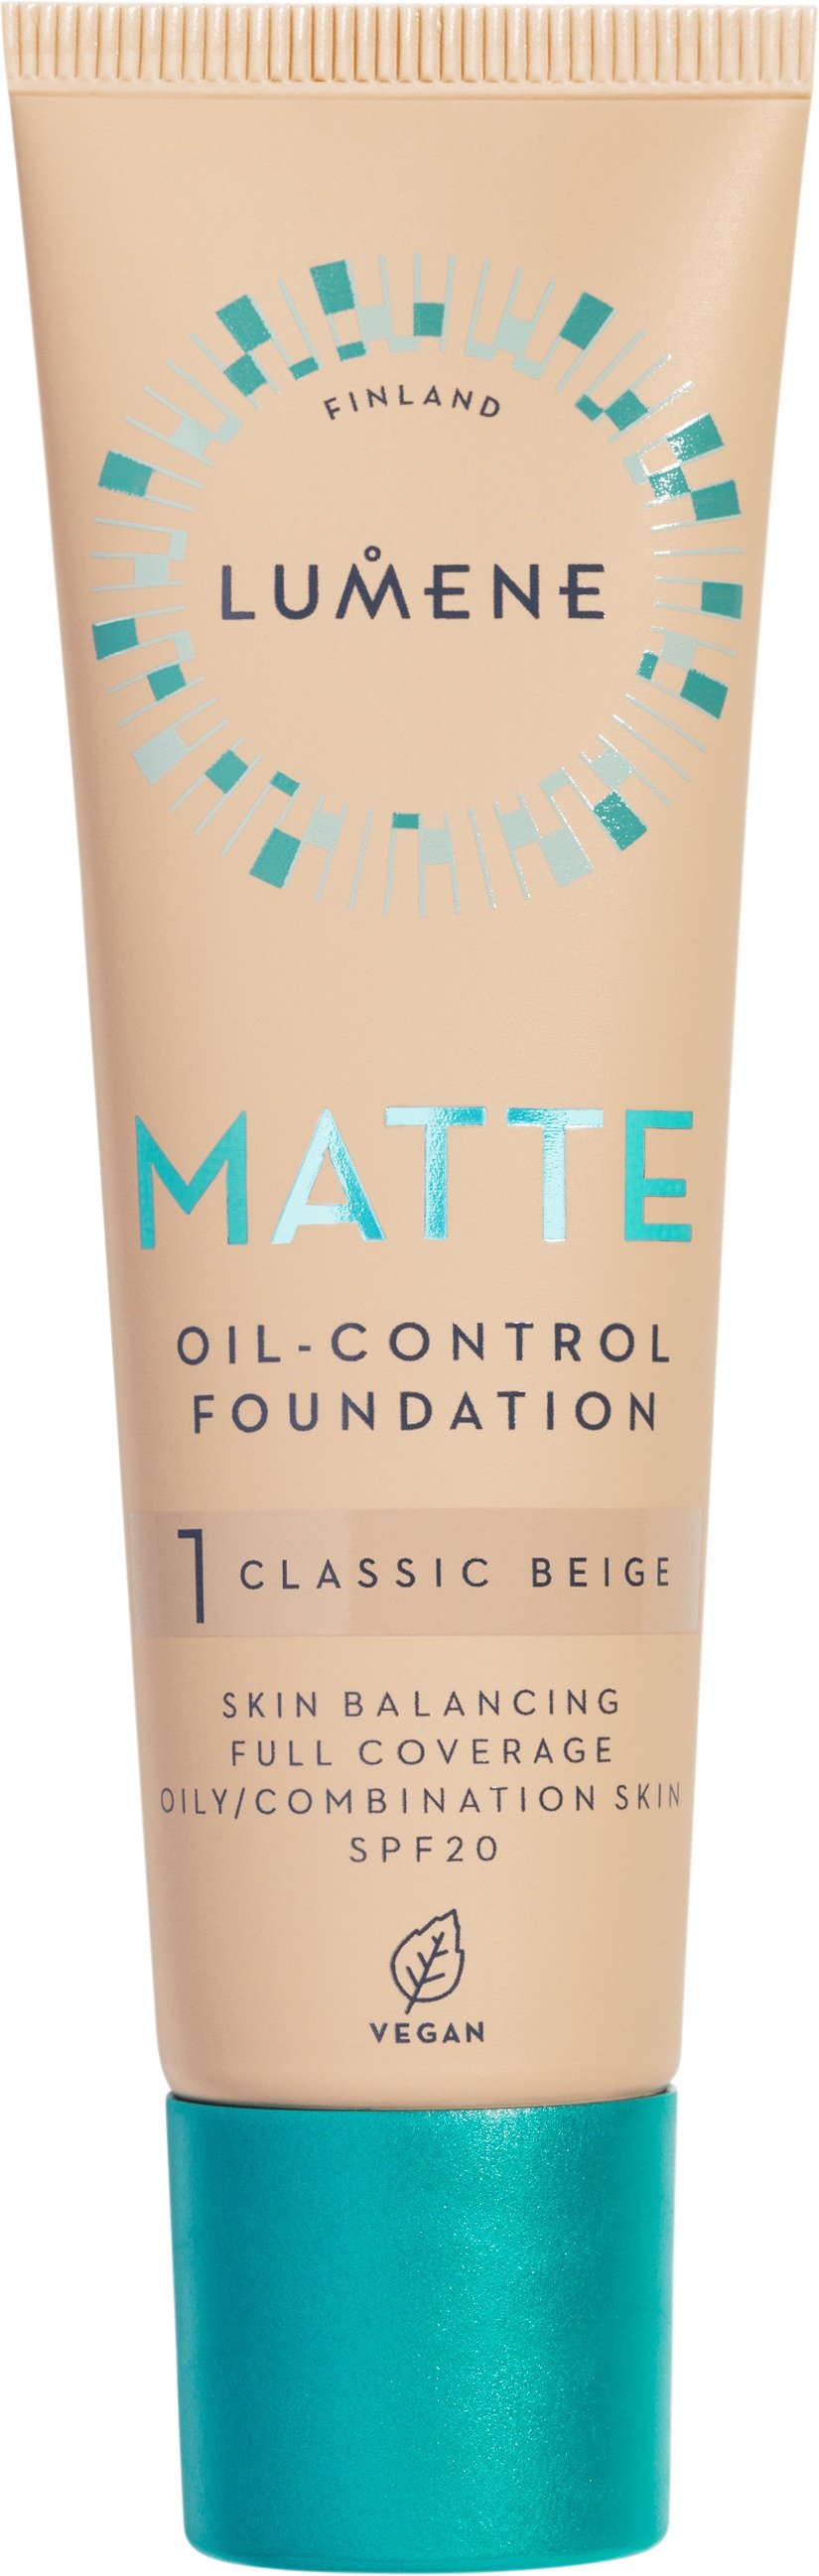 Lumene Matte Oil-Control Foundation SPF20 1 Classic Beige 30 ml